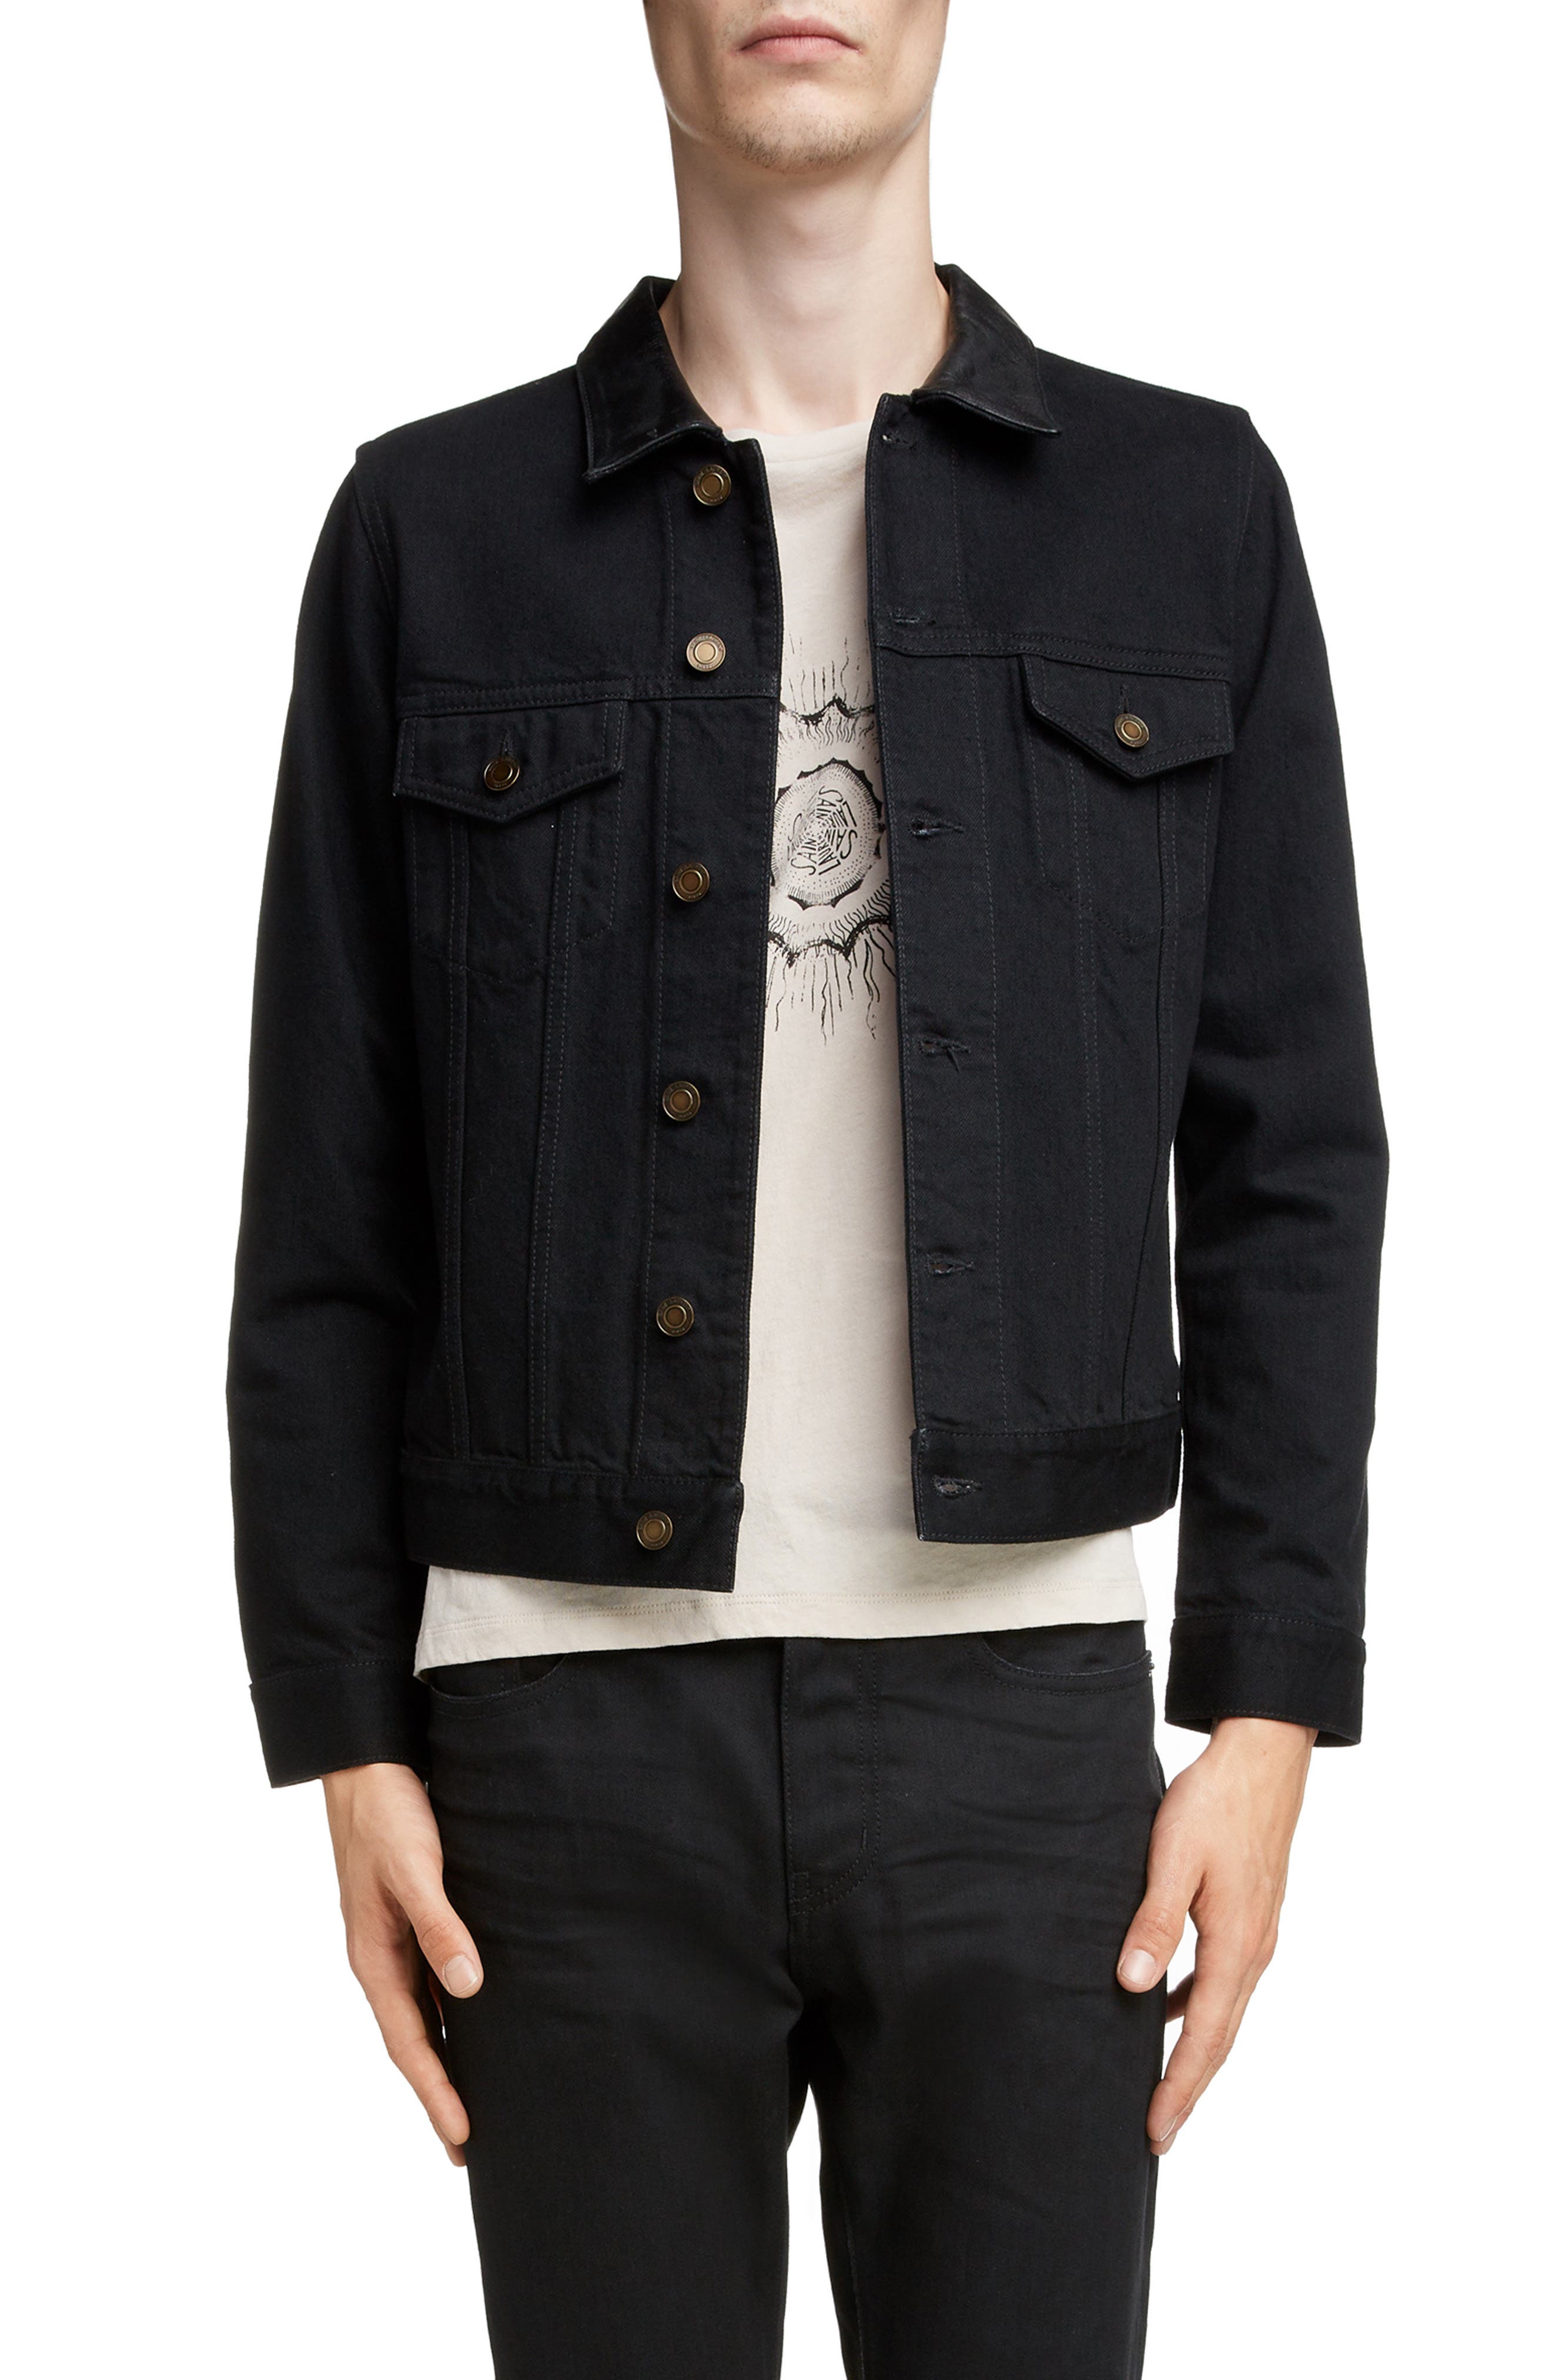 black fitted jean jacket